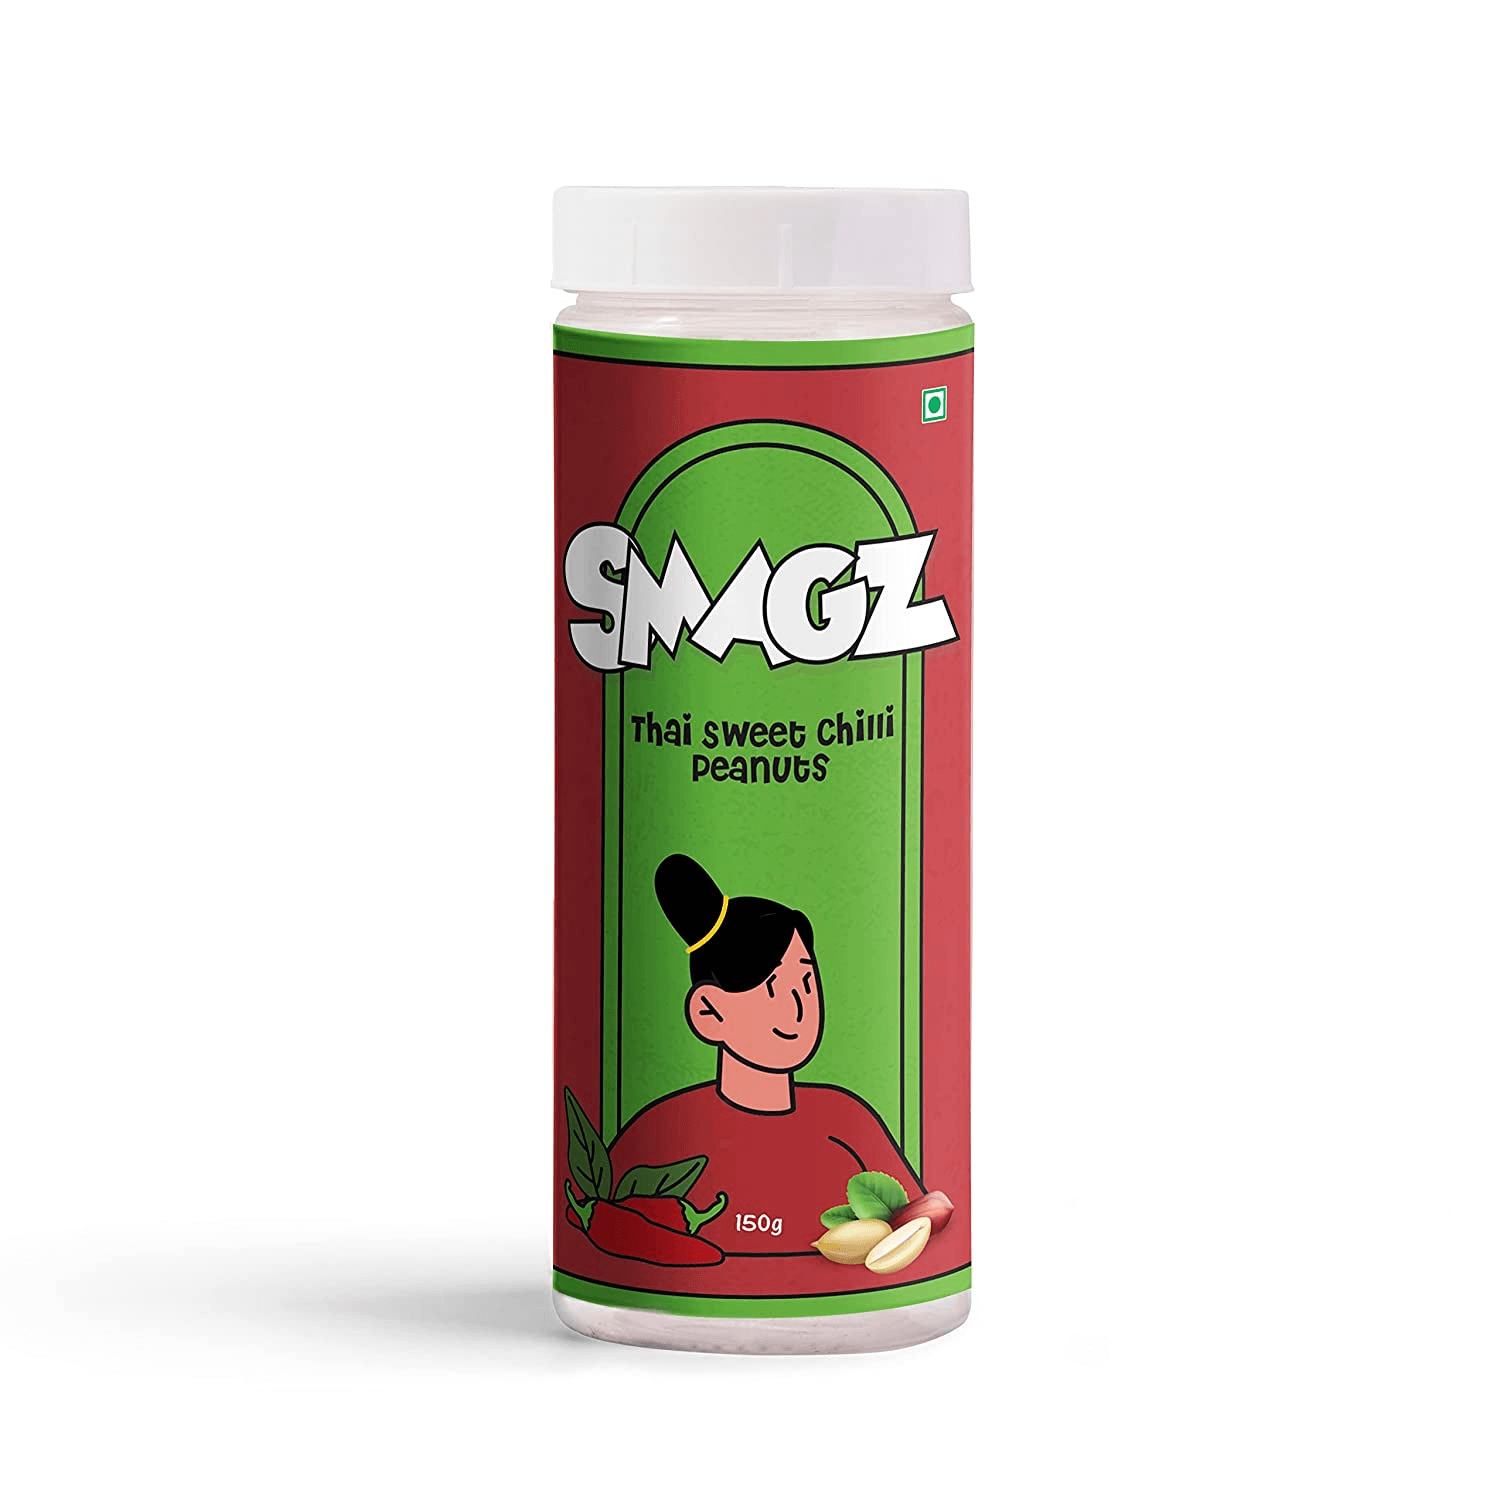 SMAGZ Thai Sweet Chilli Peanut Healthy Namkeen and Snacks